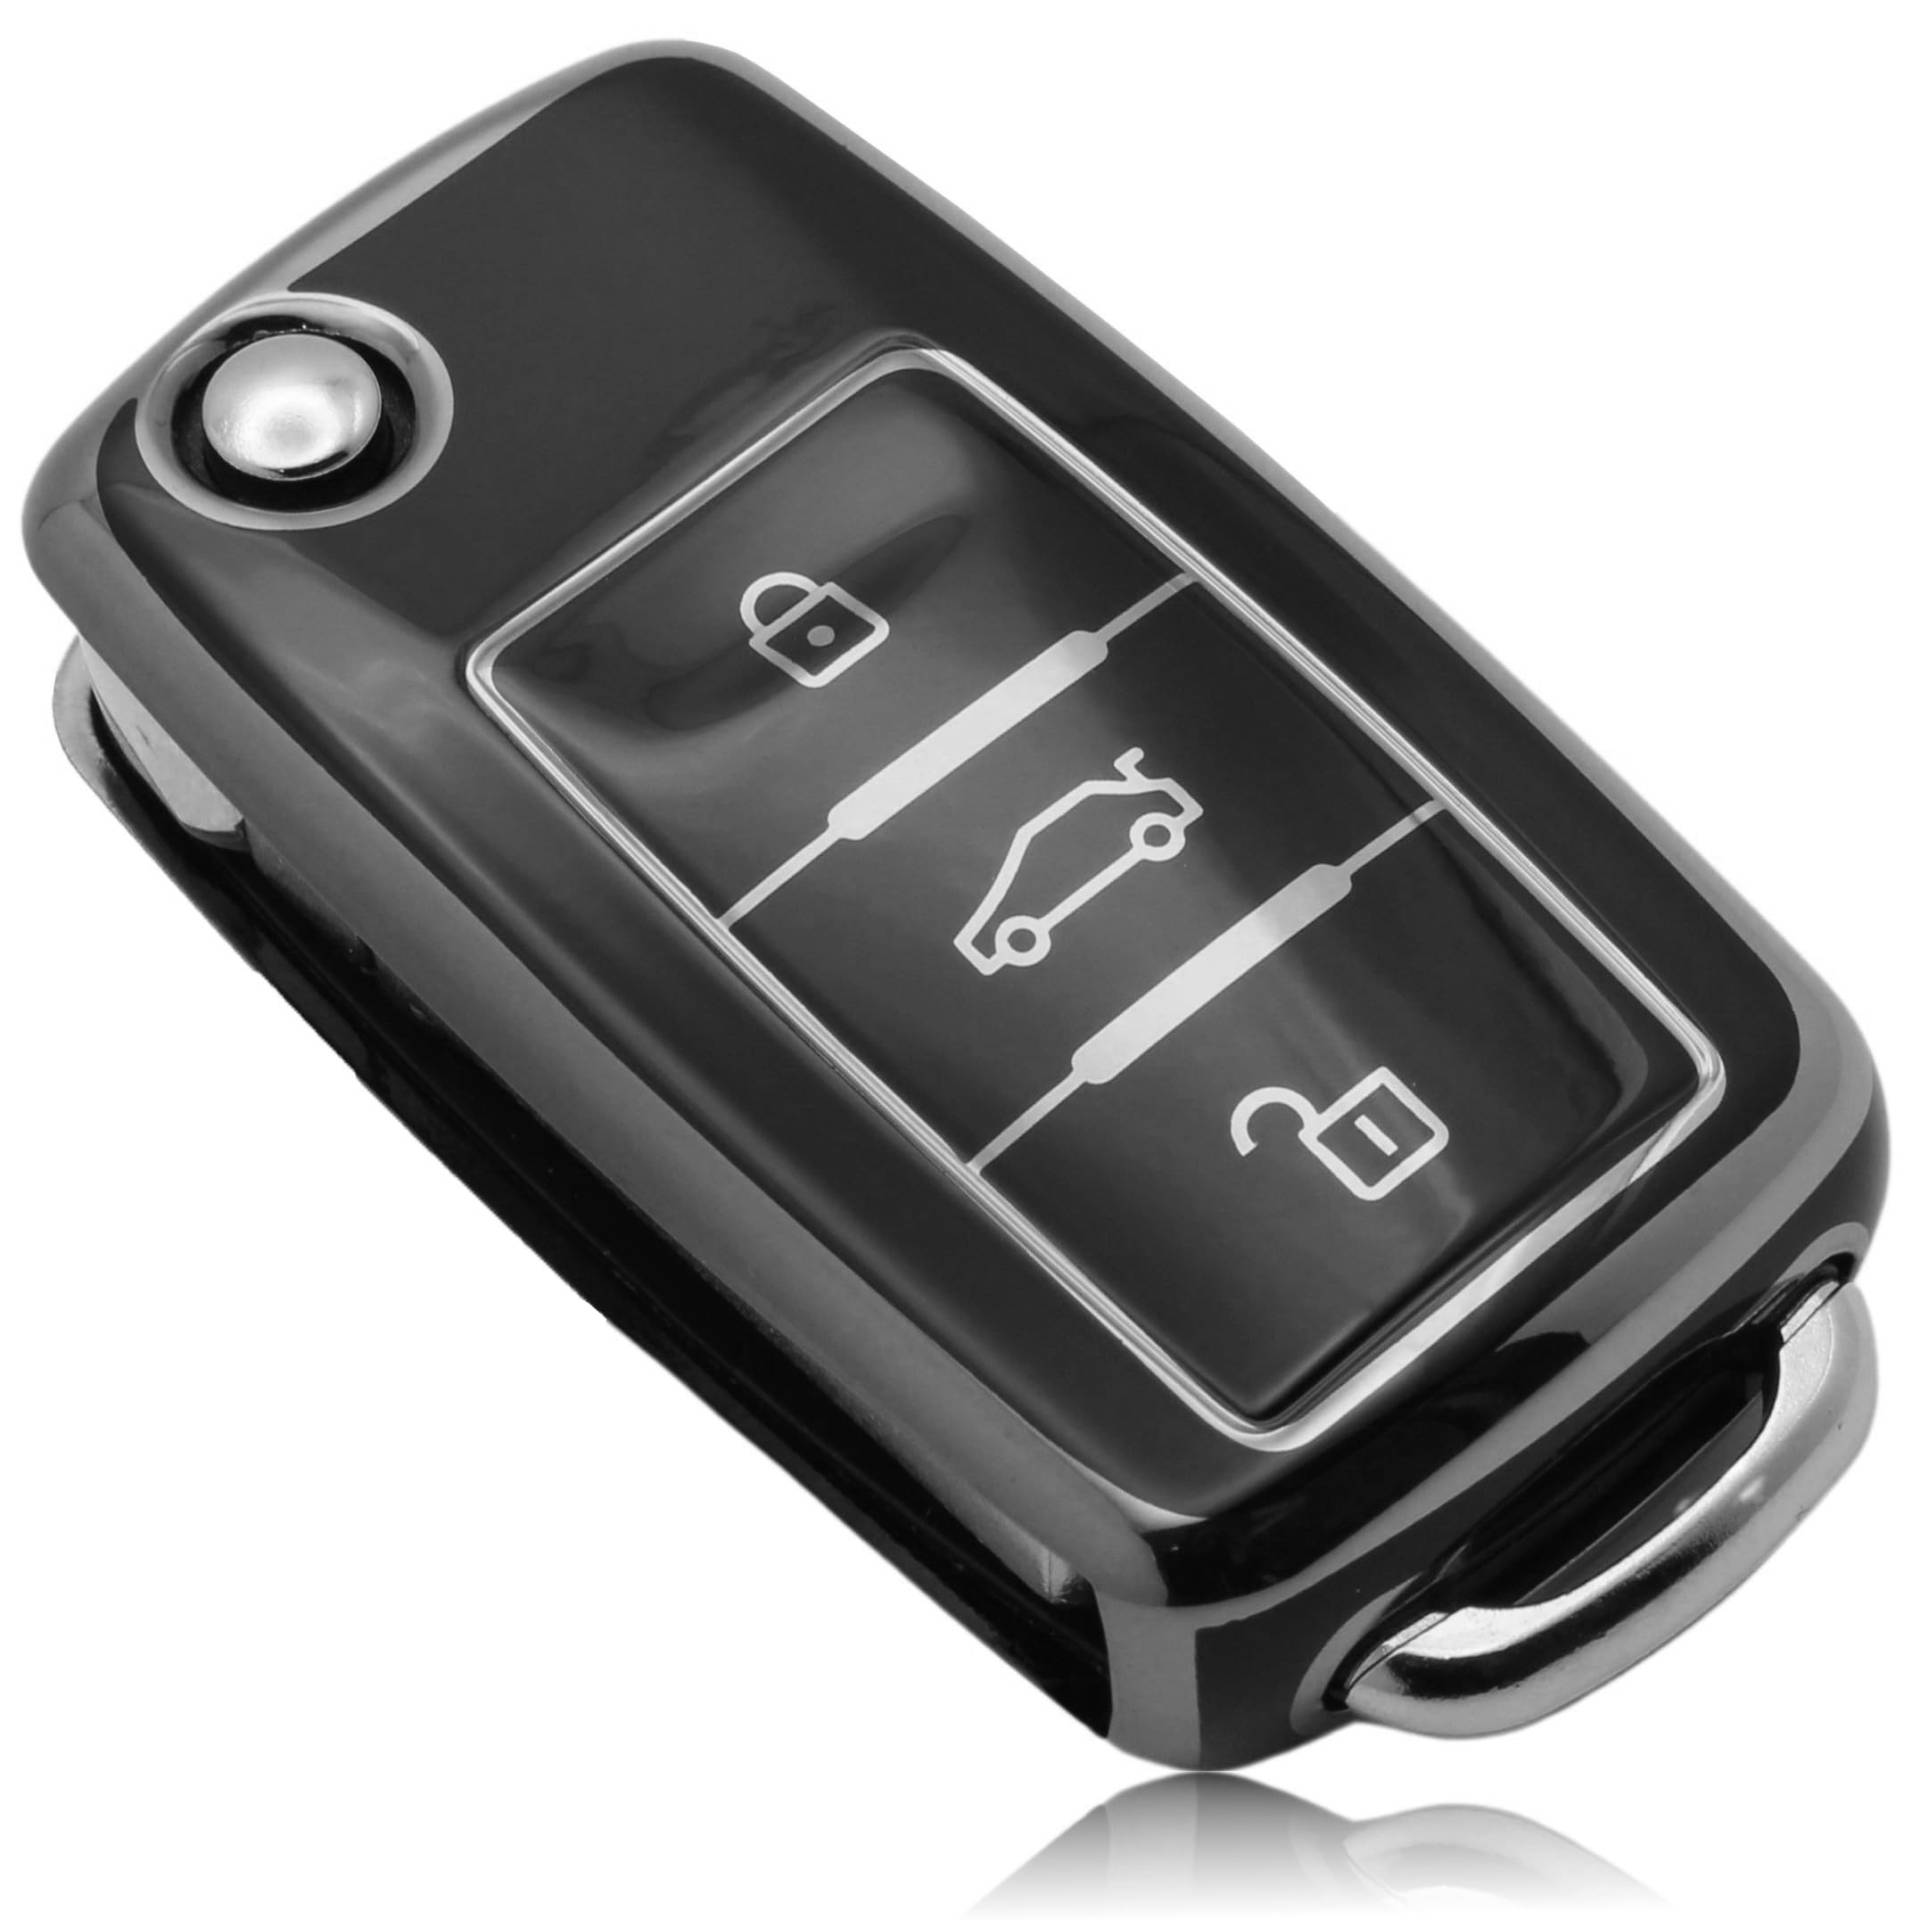 FOAMO Autoschlüssel Hülle Kompatibel mit VW Golf 6, SEAT, Skoda Autoschlüssel TPU Schlüssel-Hülle Schutz-Hülle für Autoschlüssel Schwarz Silber von FOAMO